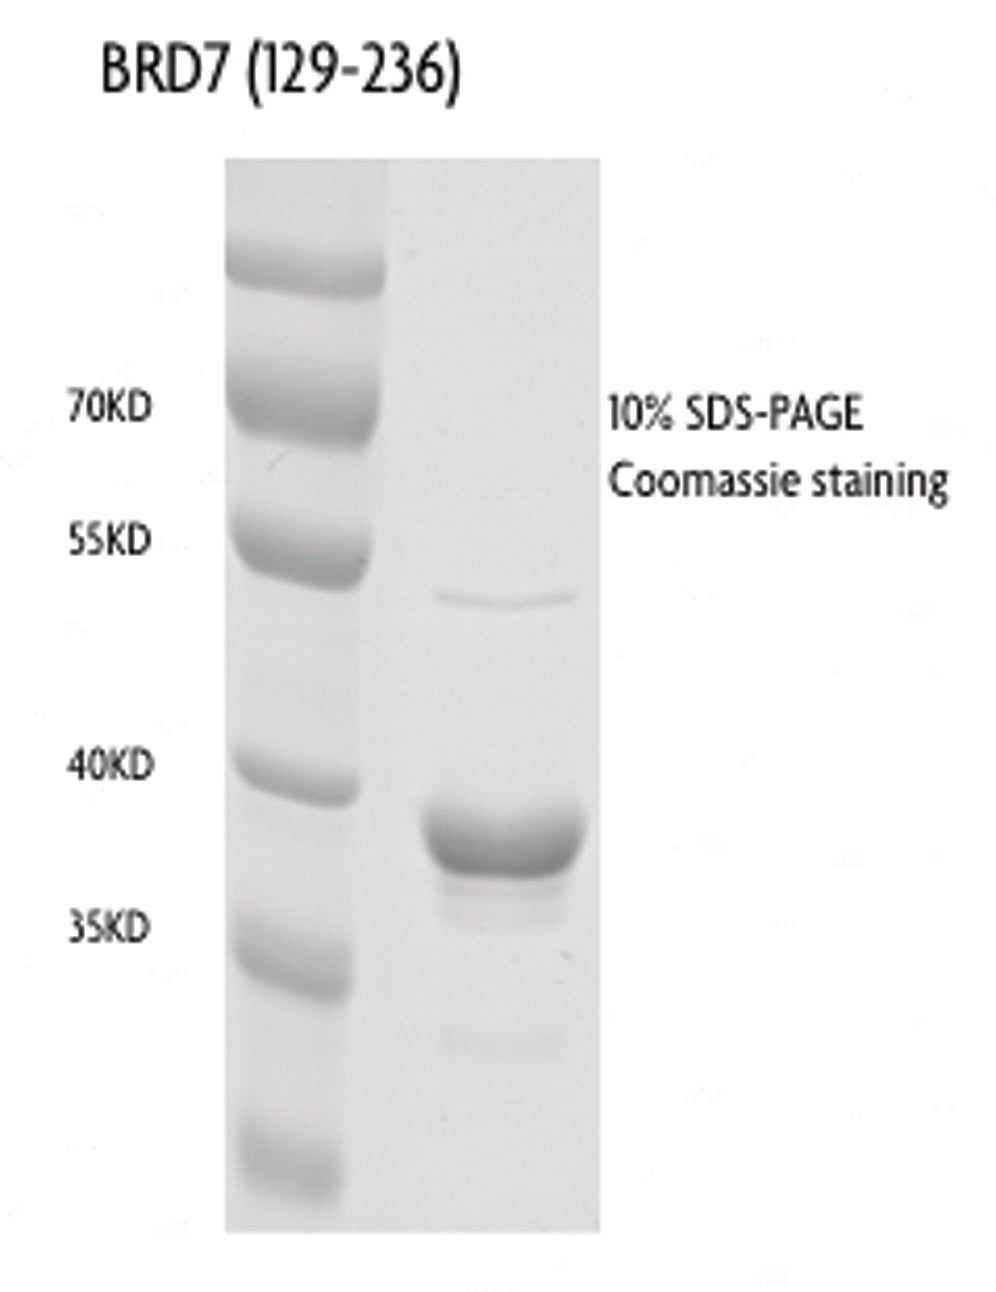 Recombinant BRD7 (129-236) protein, GST-Tag - MyBio Ireland - Active Motif